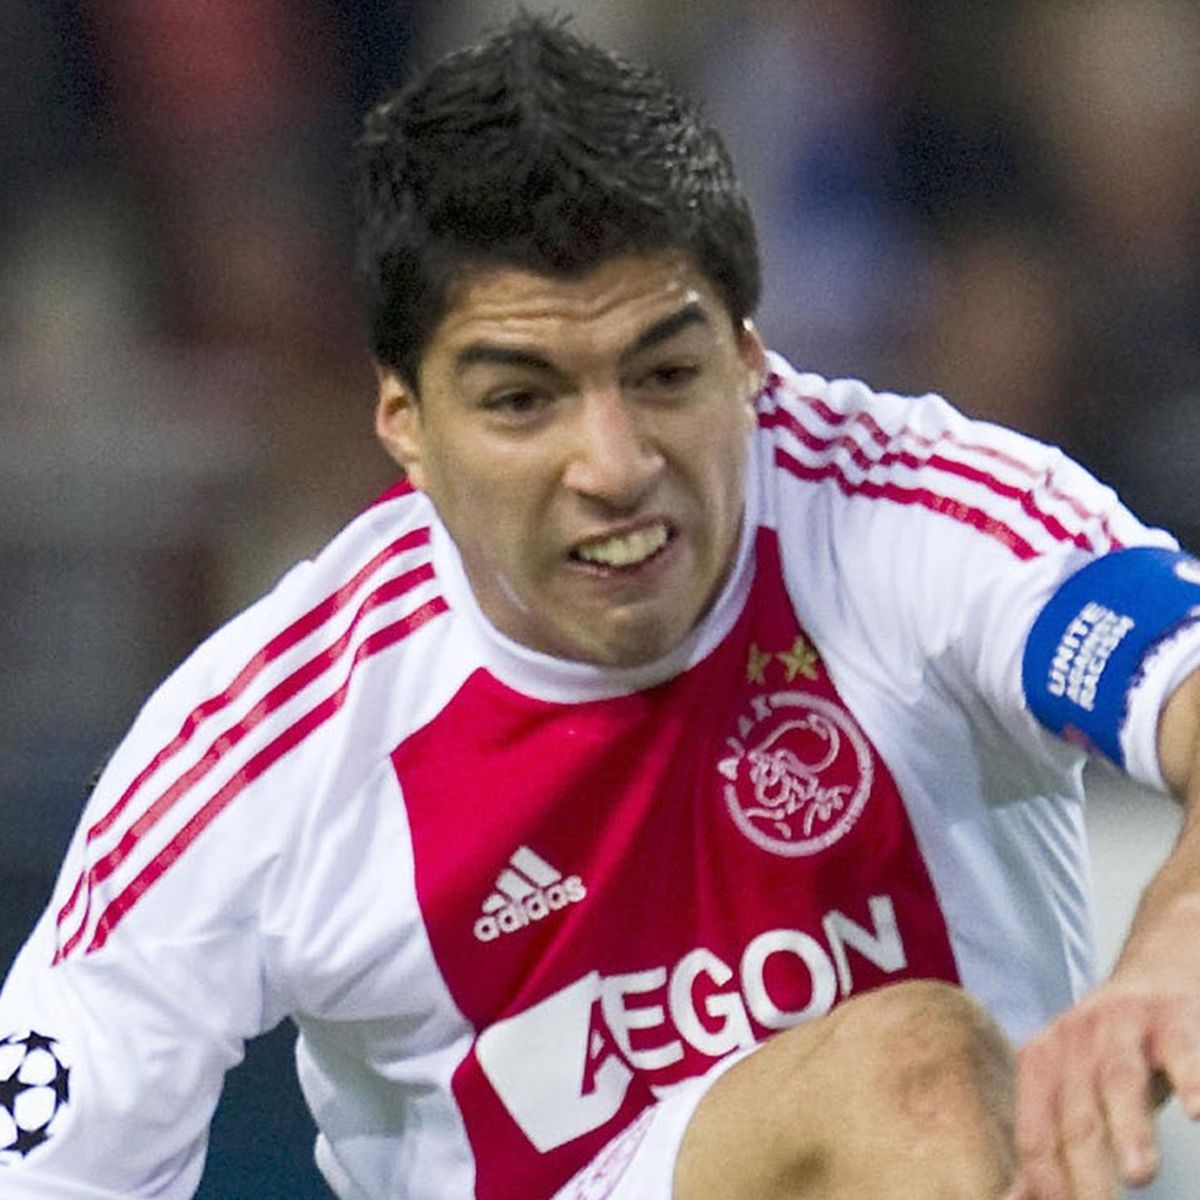 Escuela de posgrado Equipo de juegos Alrededor Ajax ban Suarez for bite - Eurosport